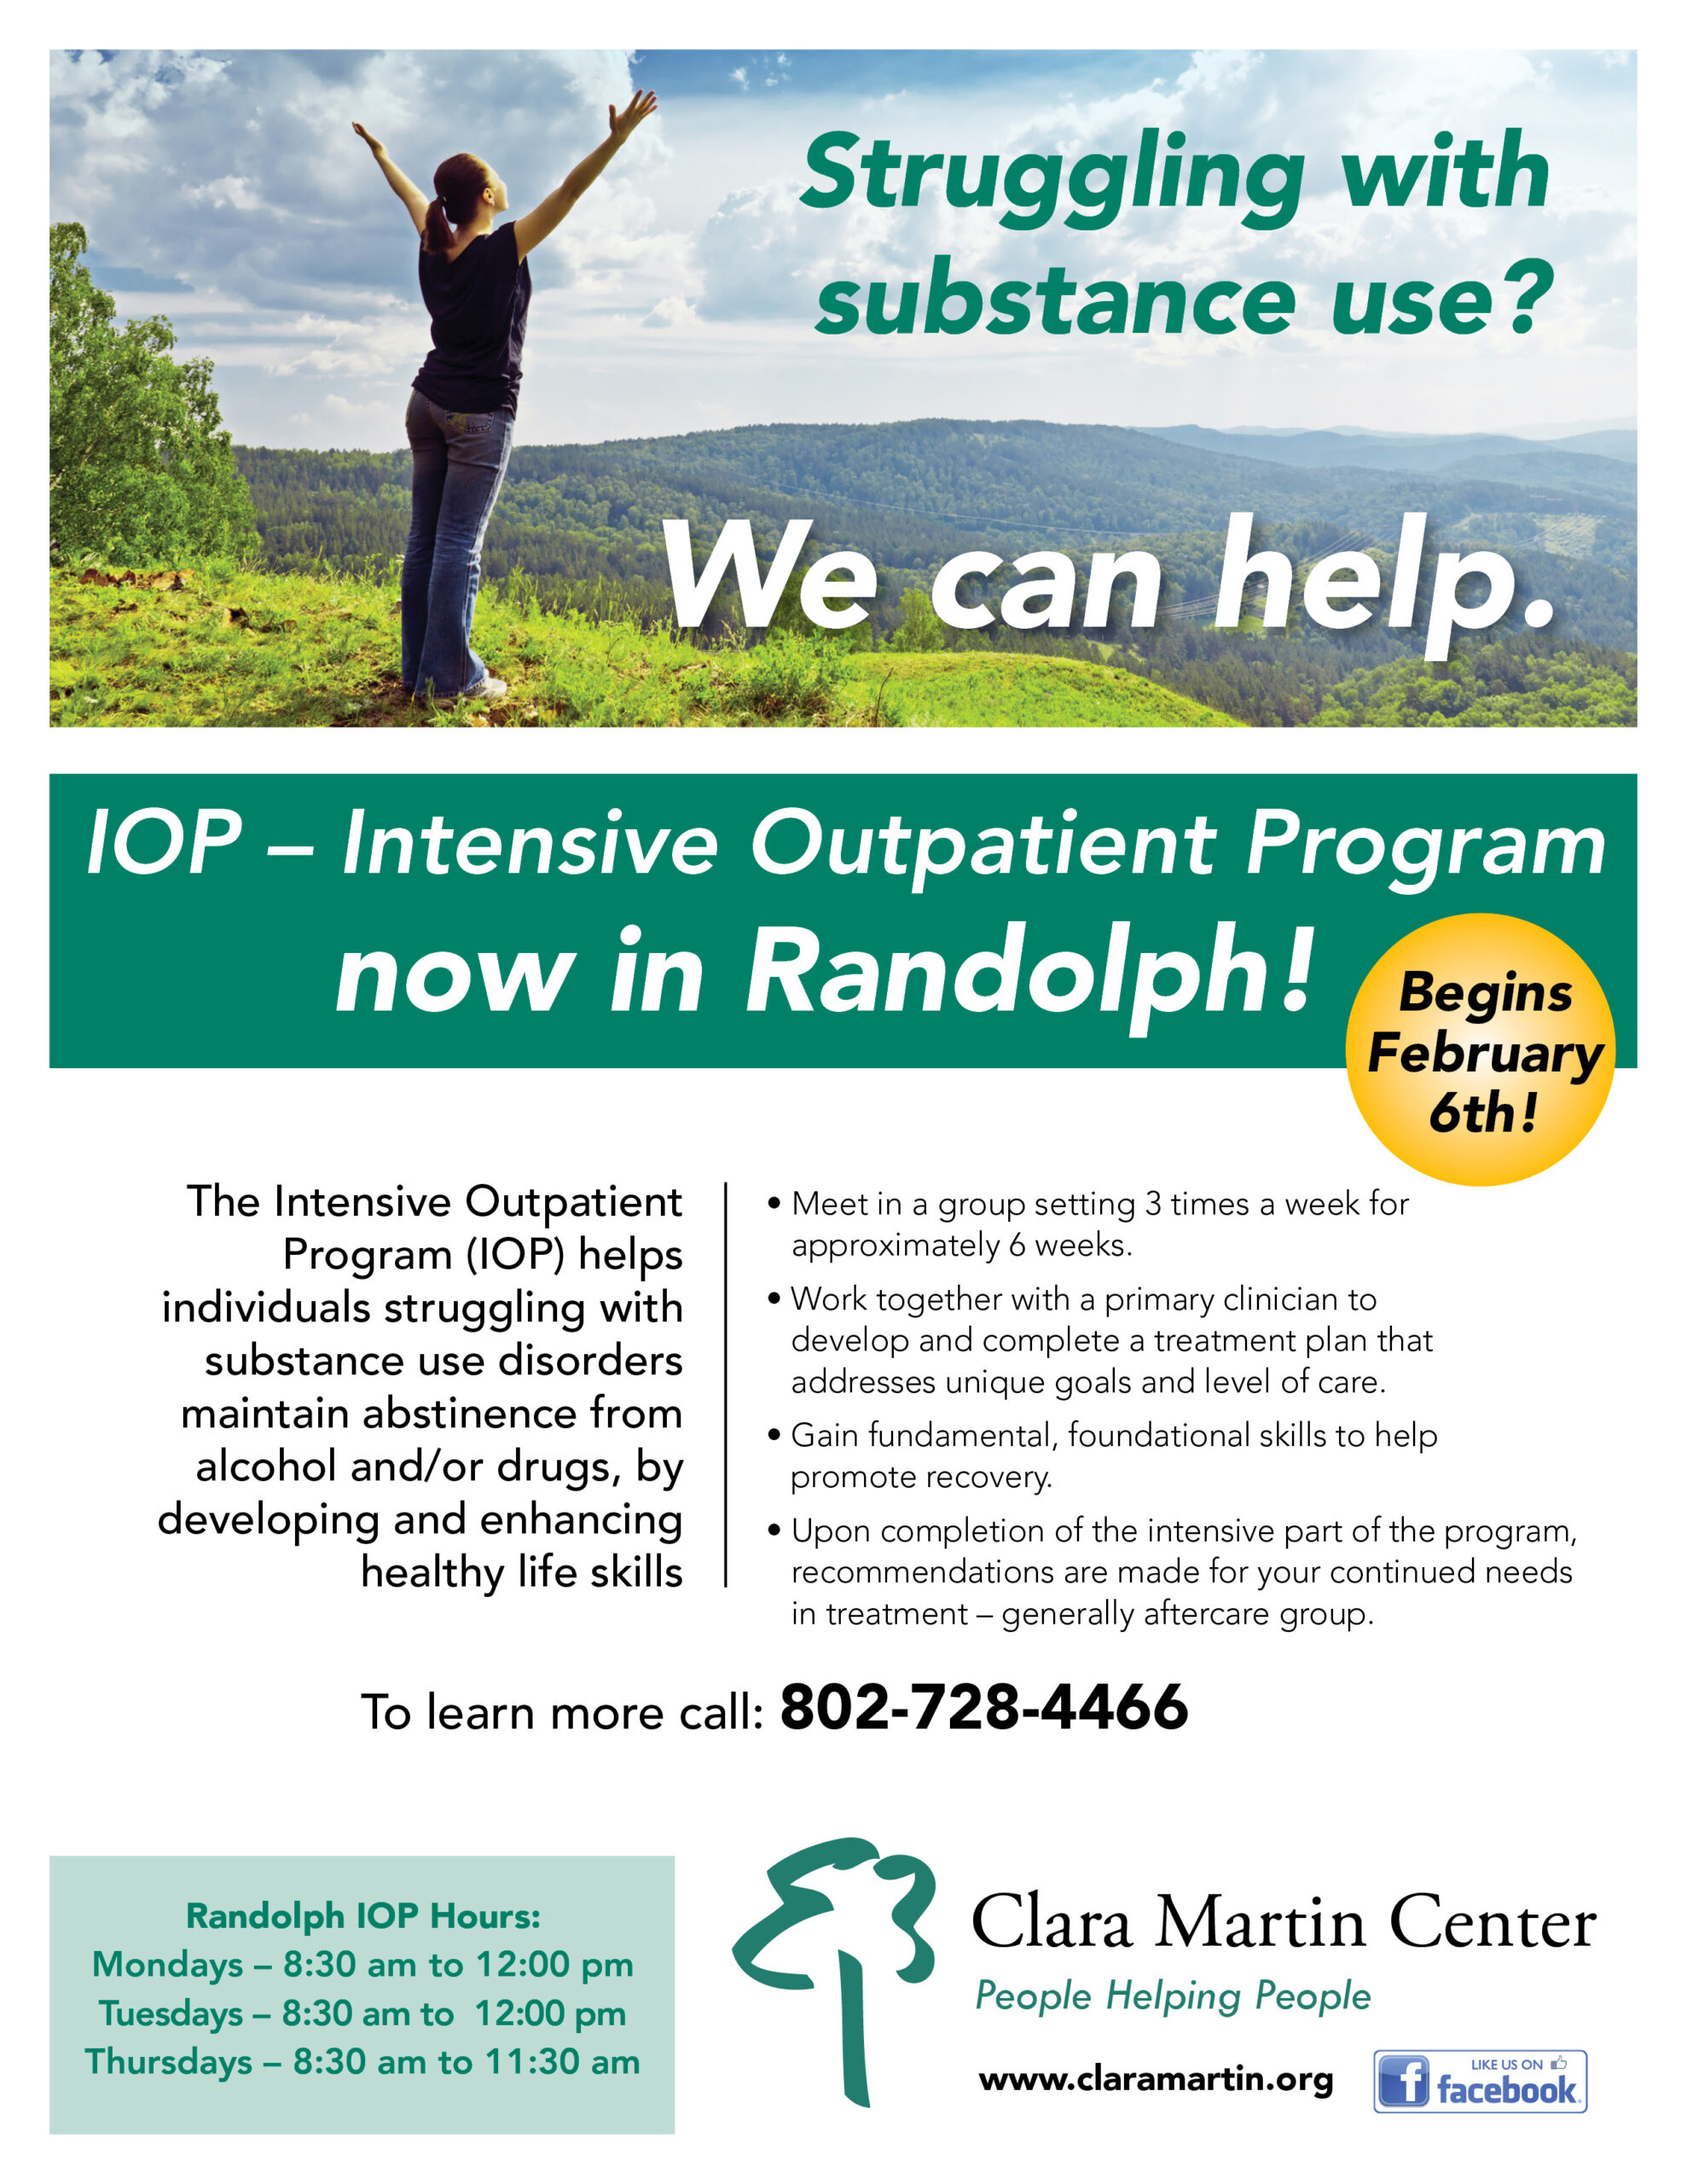 Intensive Outpatient Program in Randolph flyer